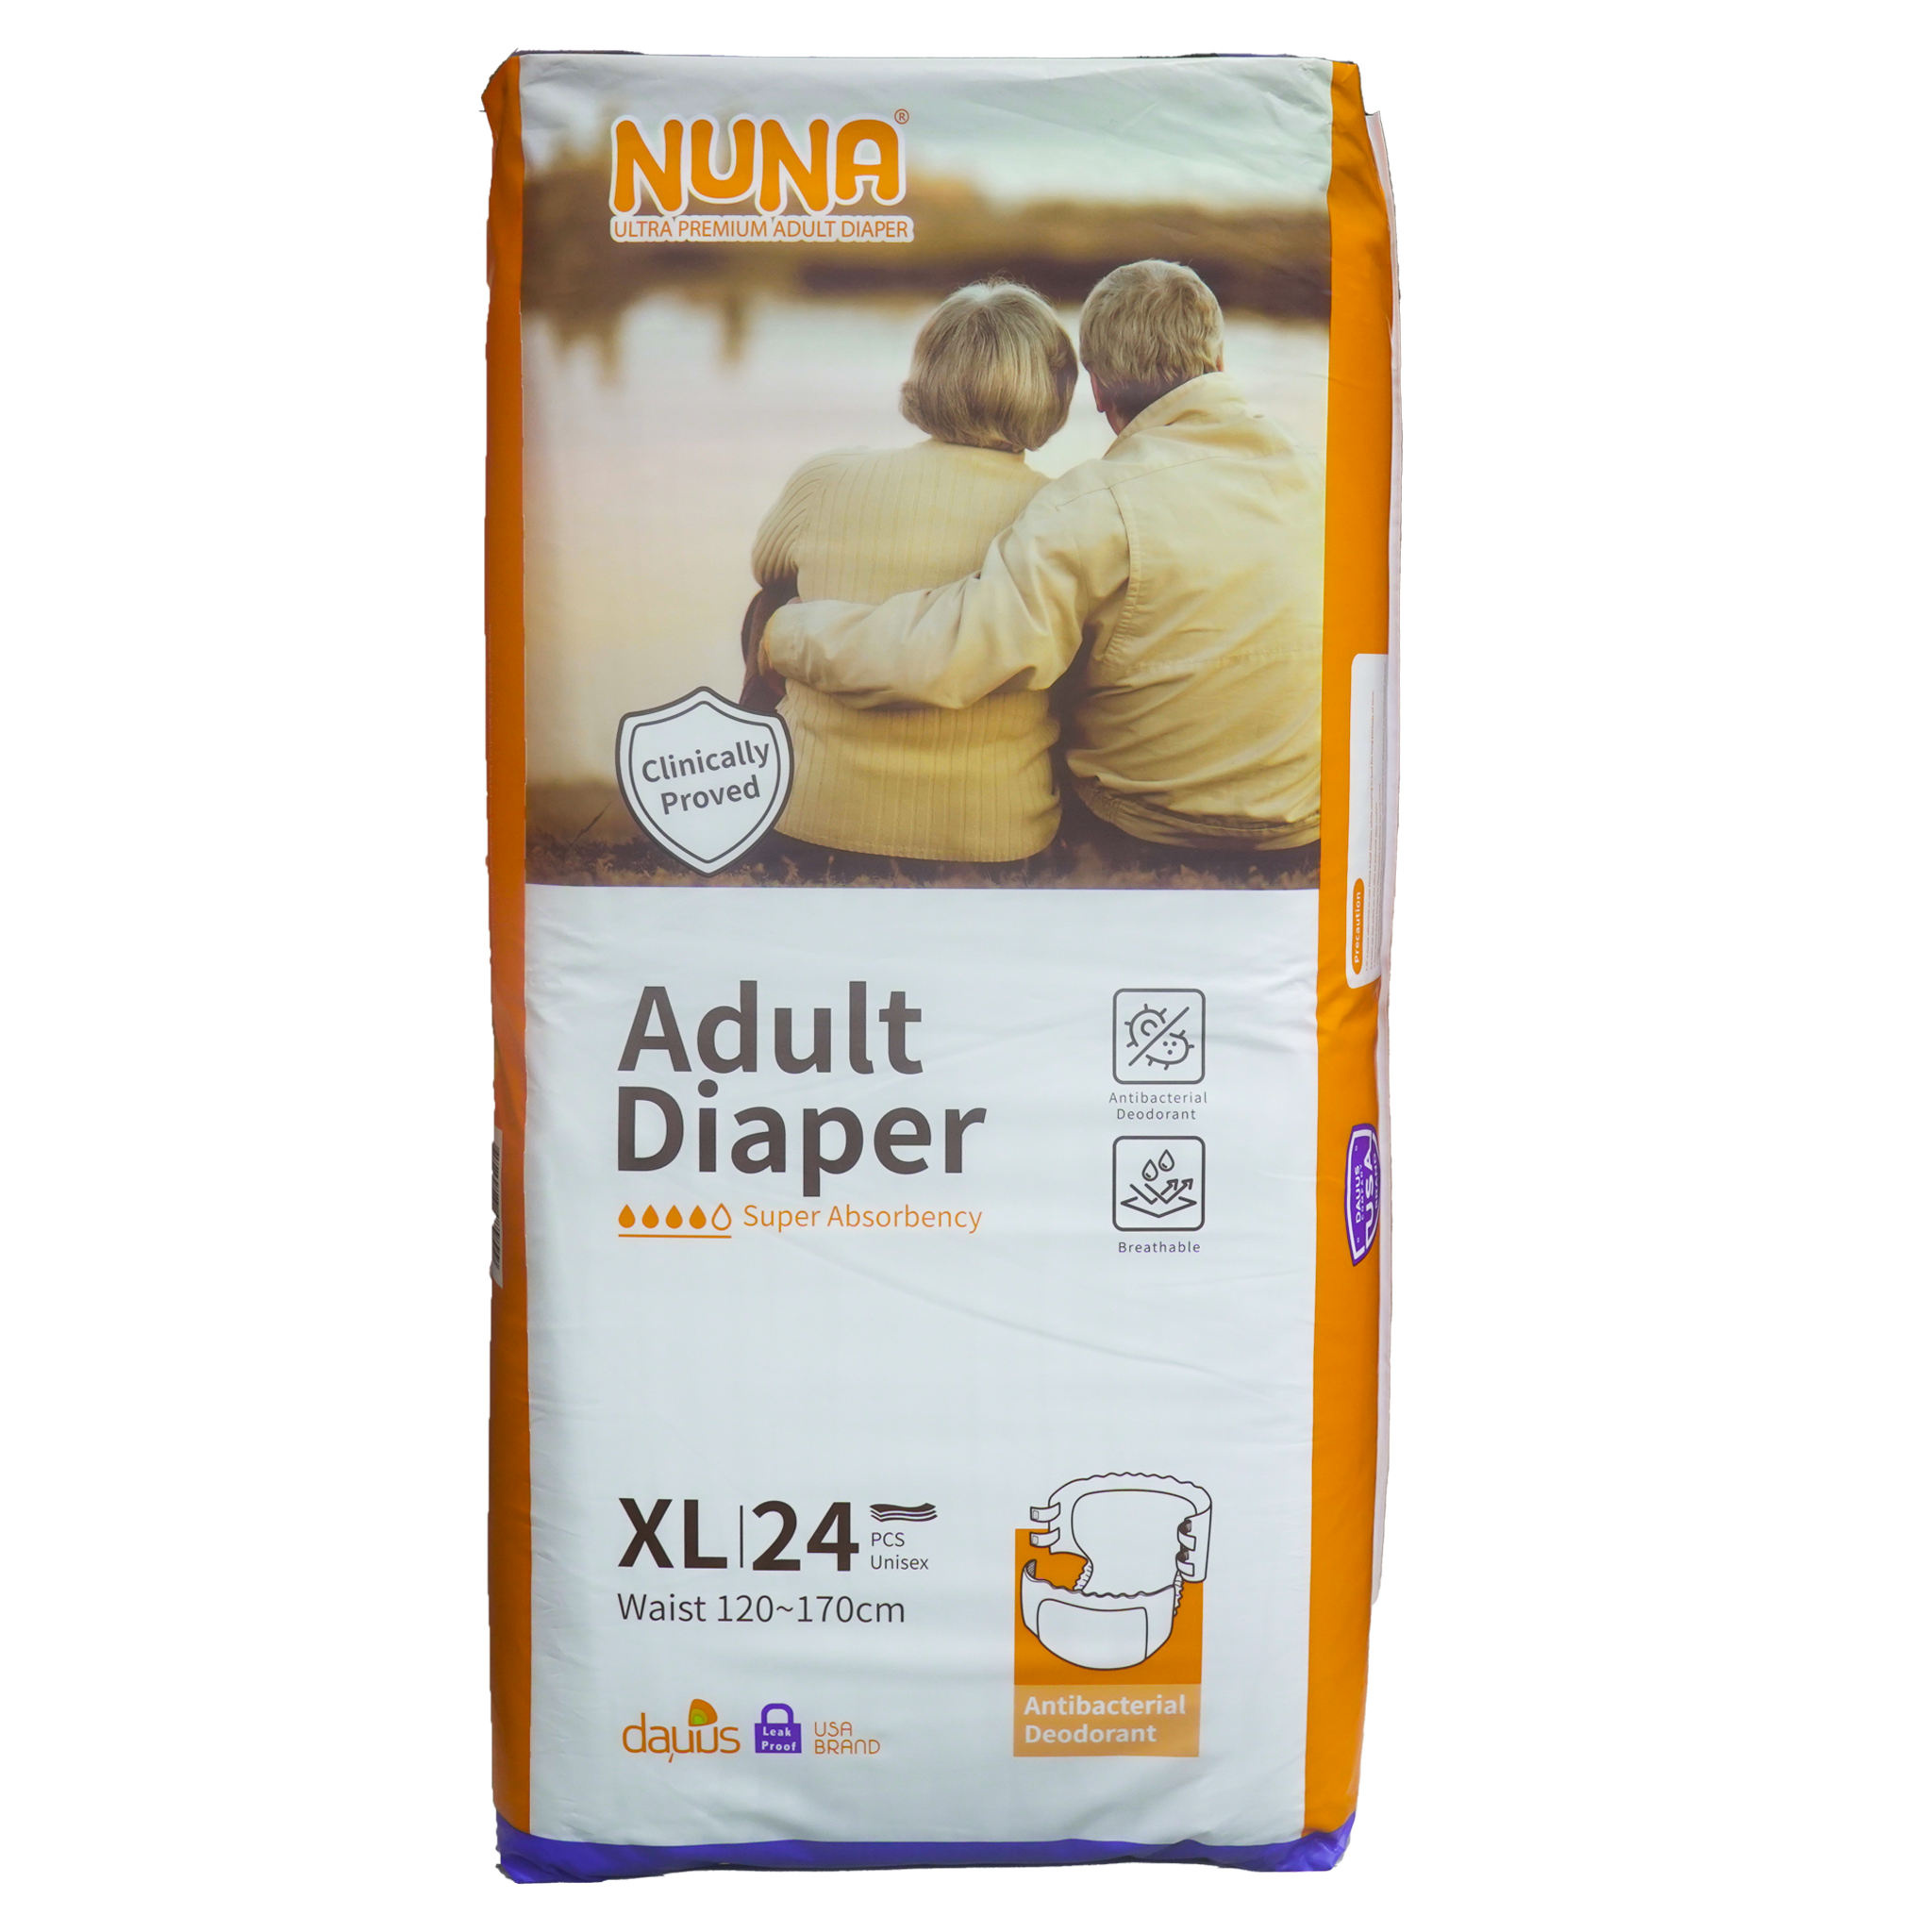 Nuna Adult Diaper Xl